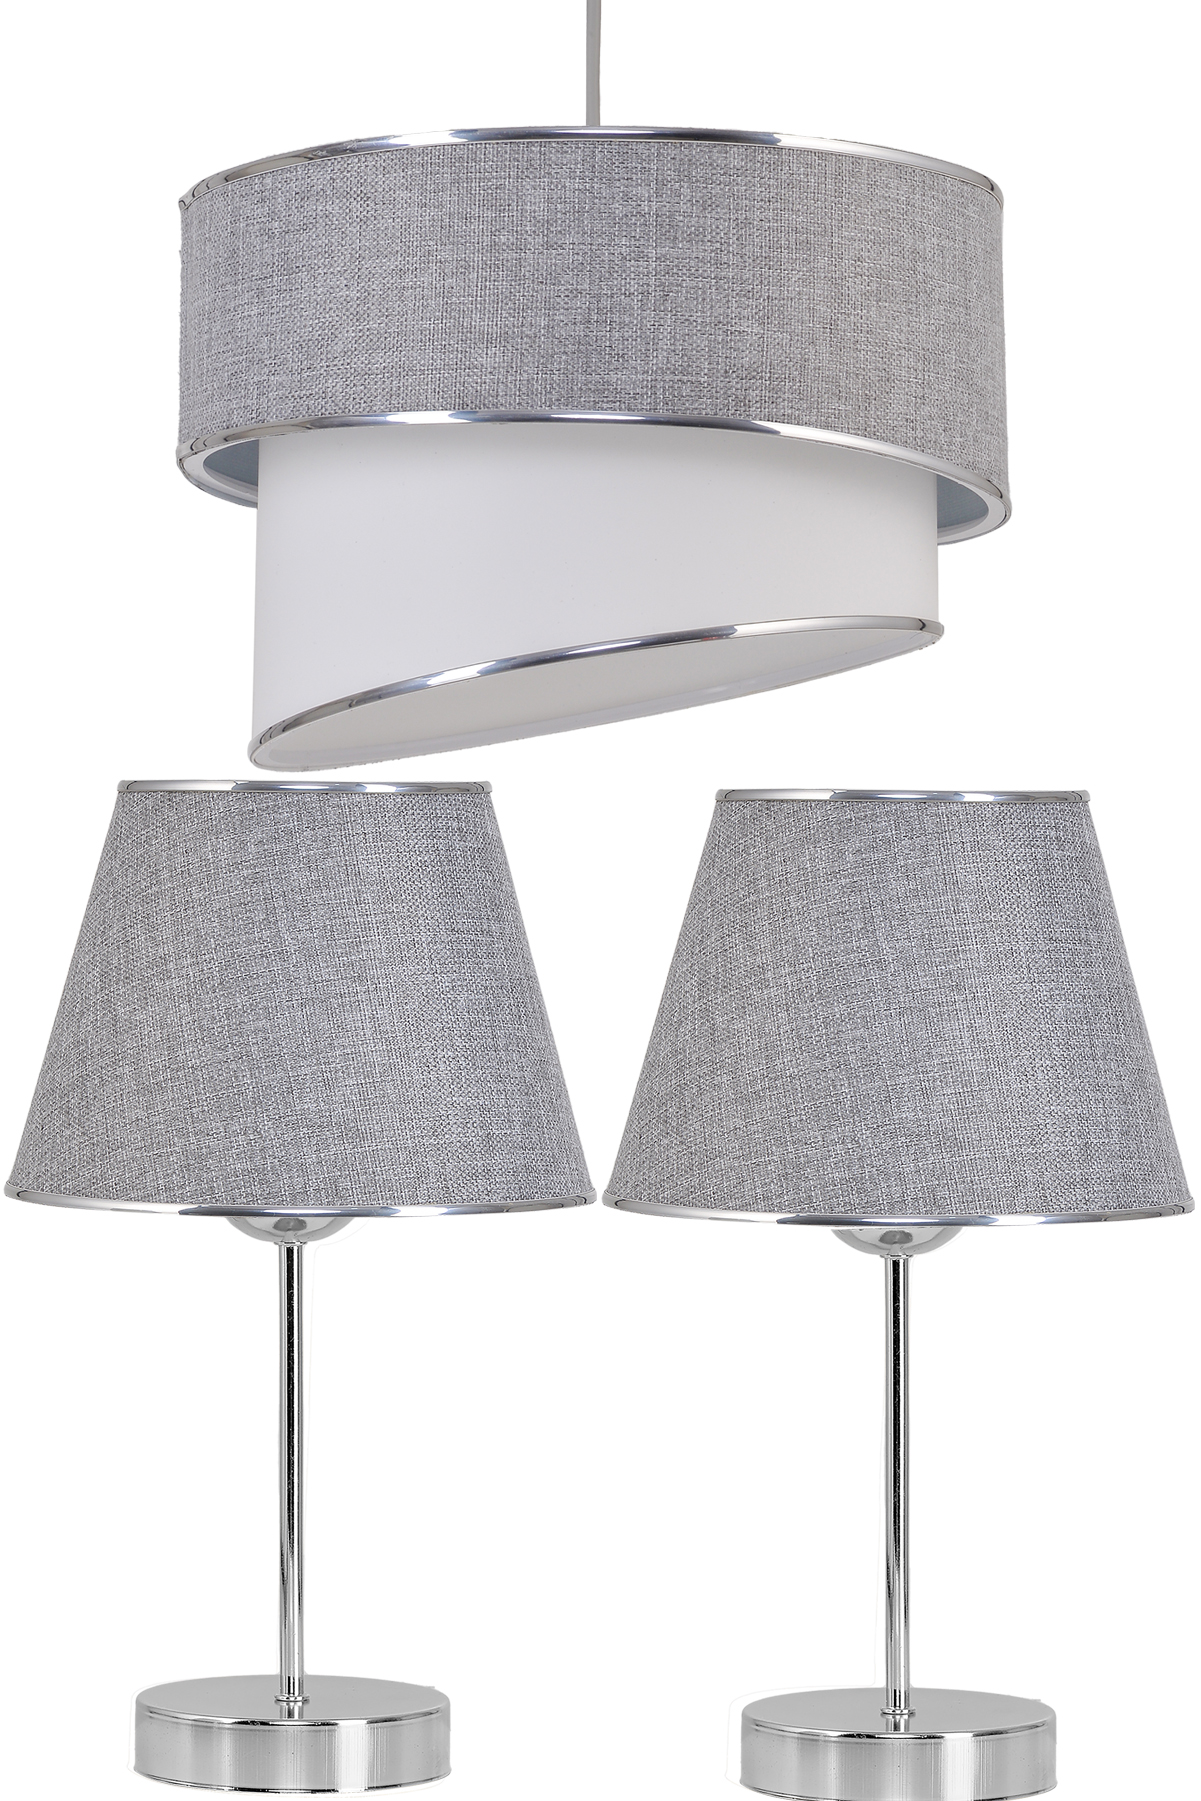 Ruzgar 1 pcs Ceiling lighting/2 pcs Table Lamp